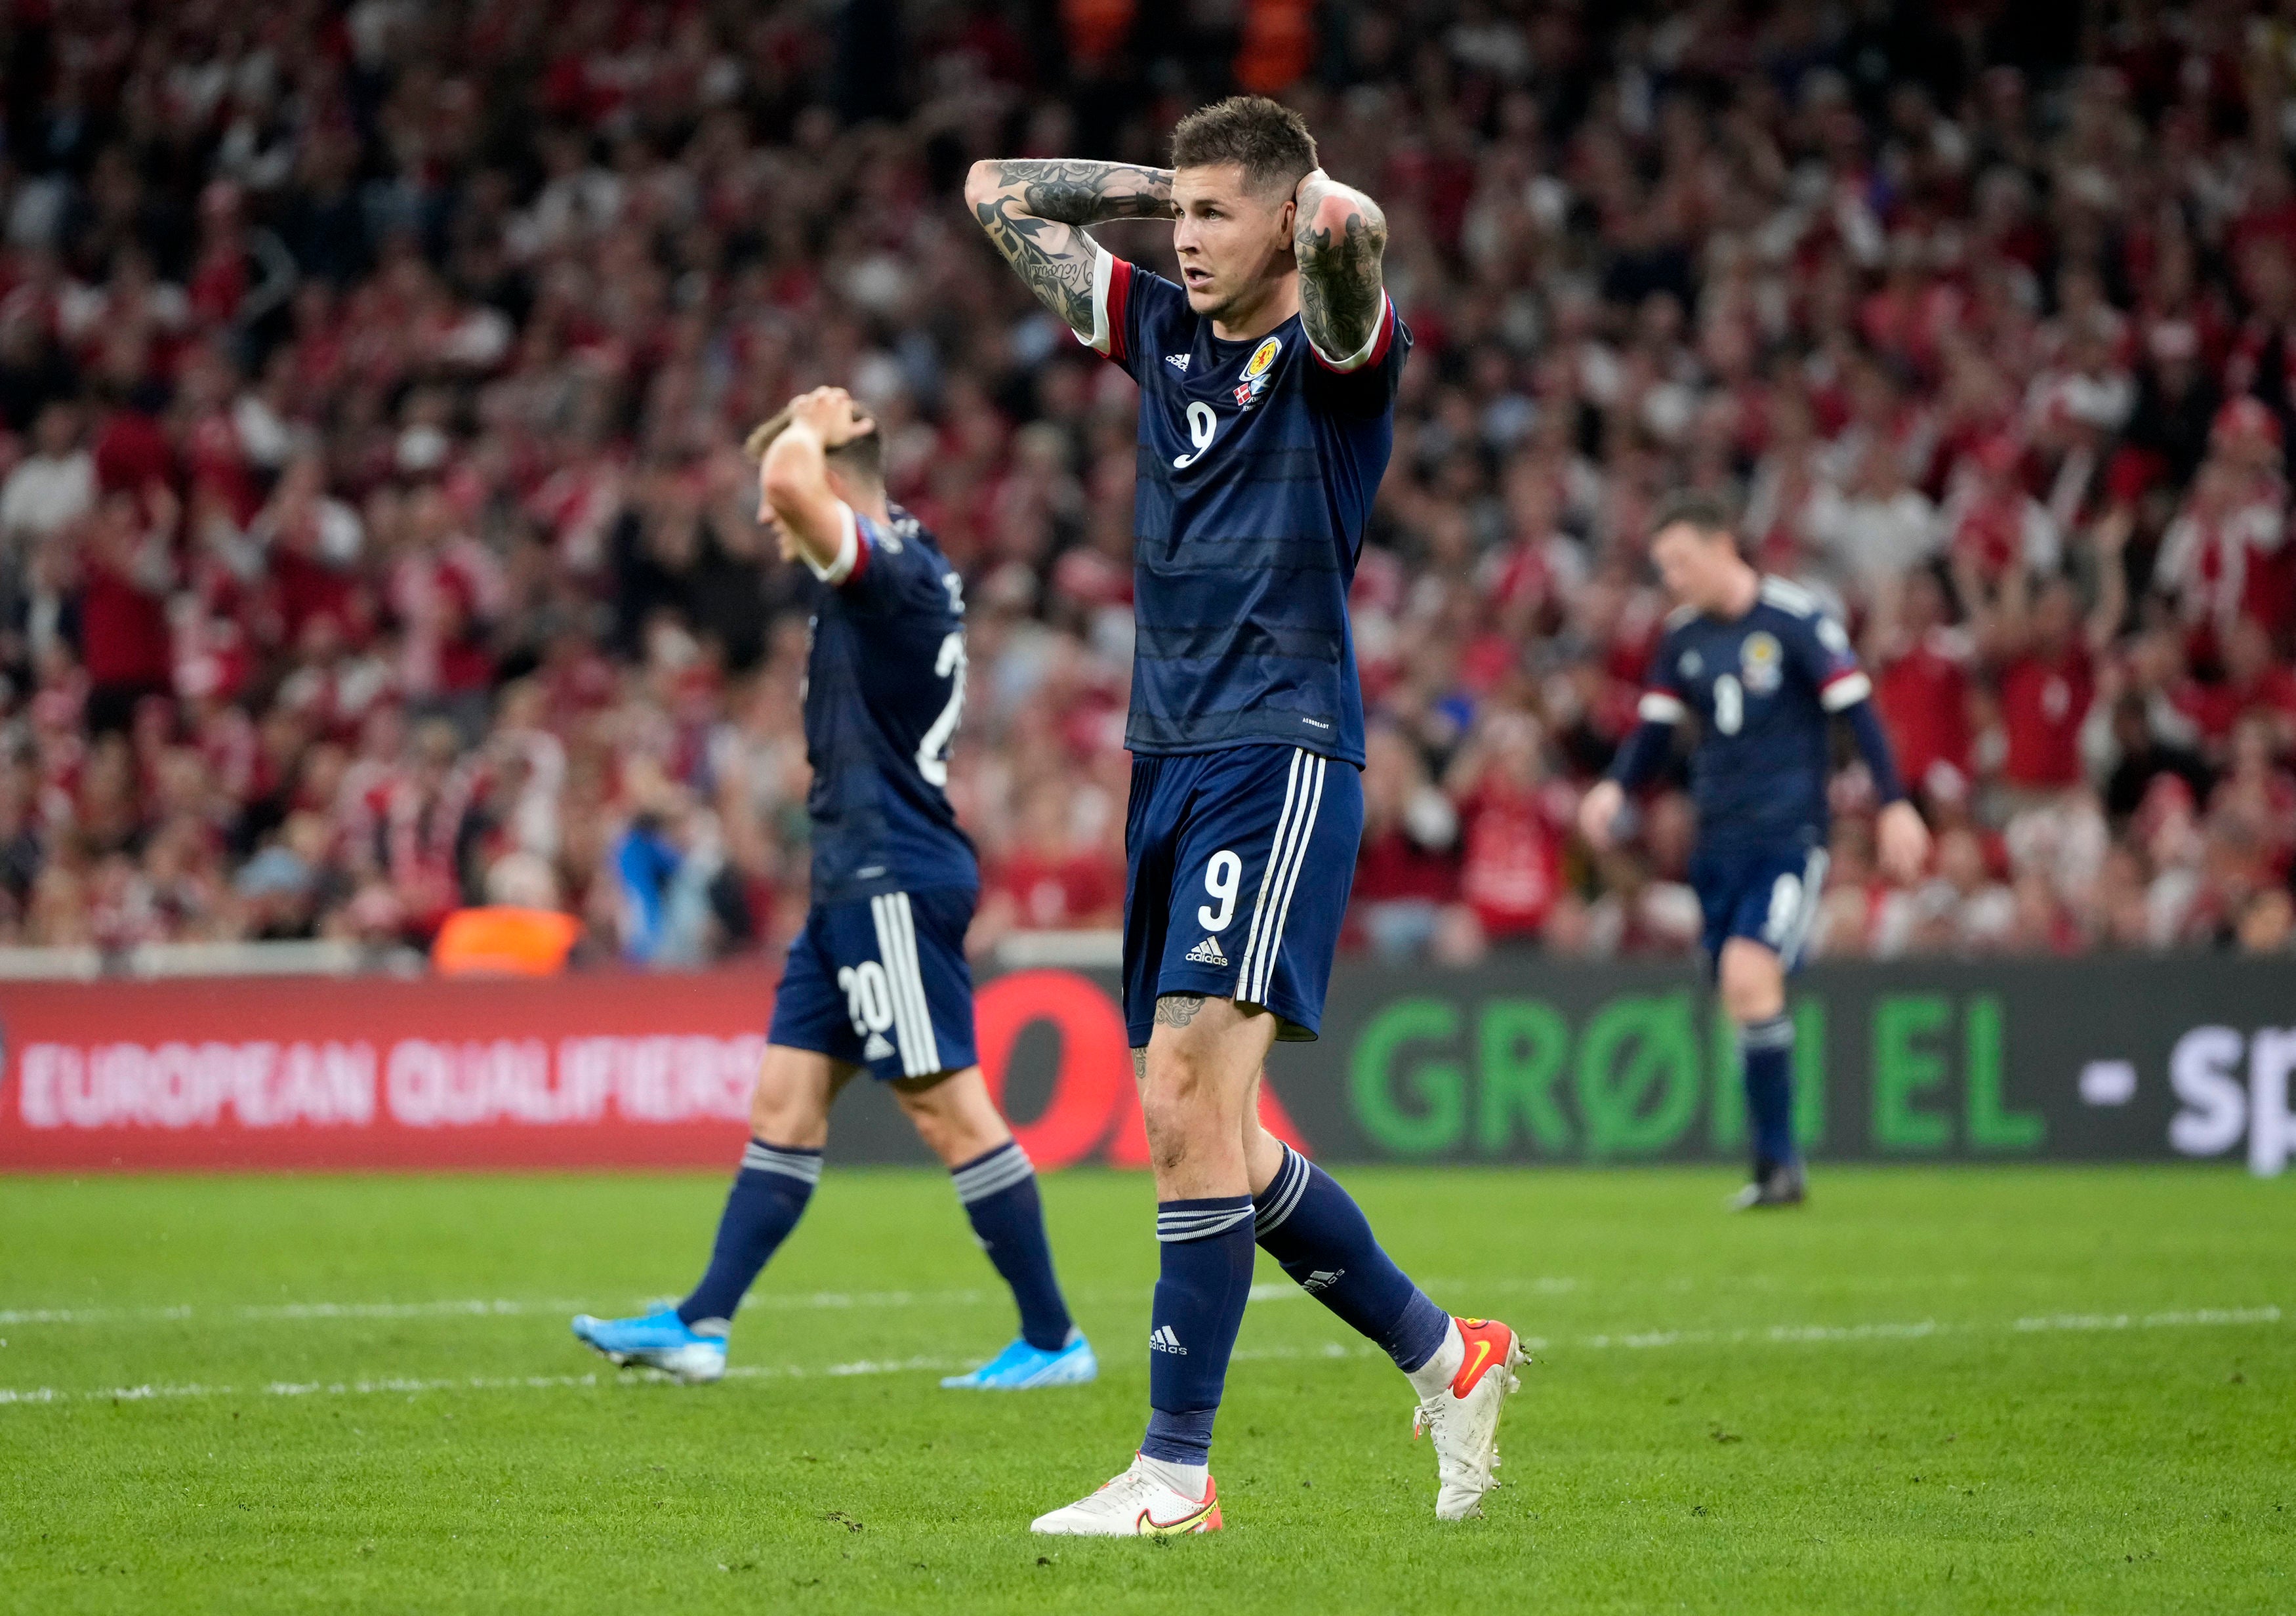 Scotland lost 2-0 in Copenhagen